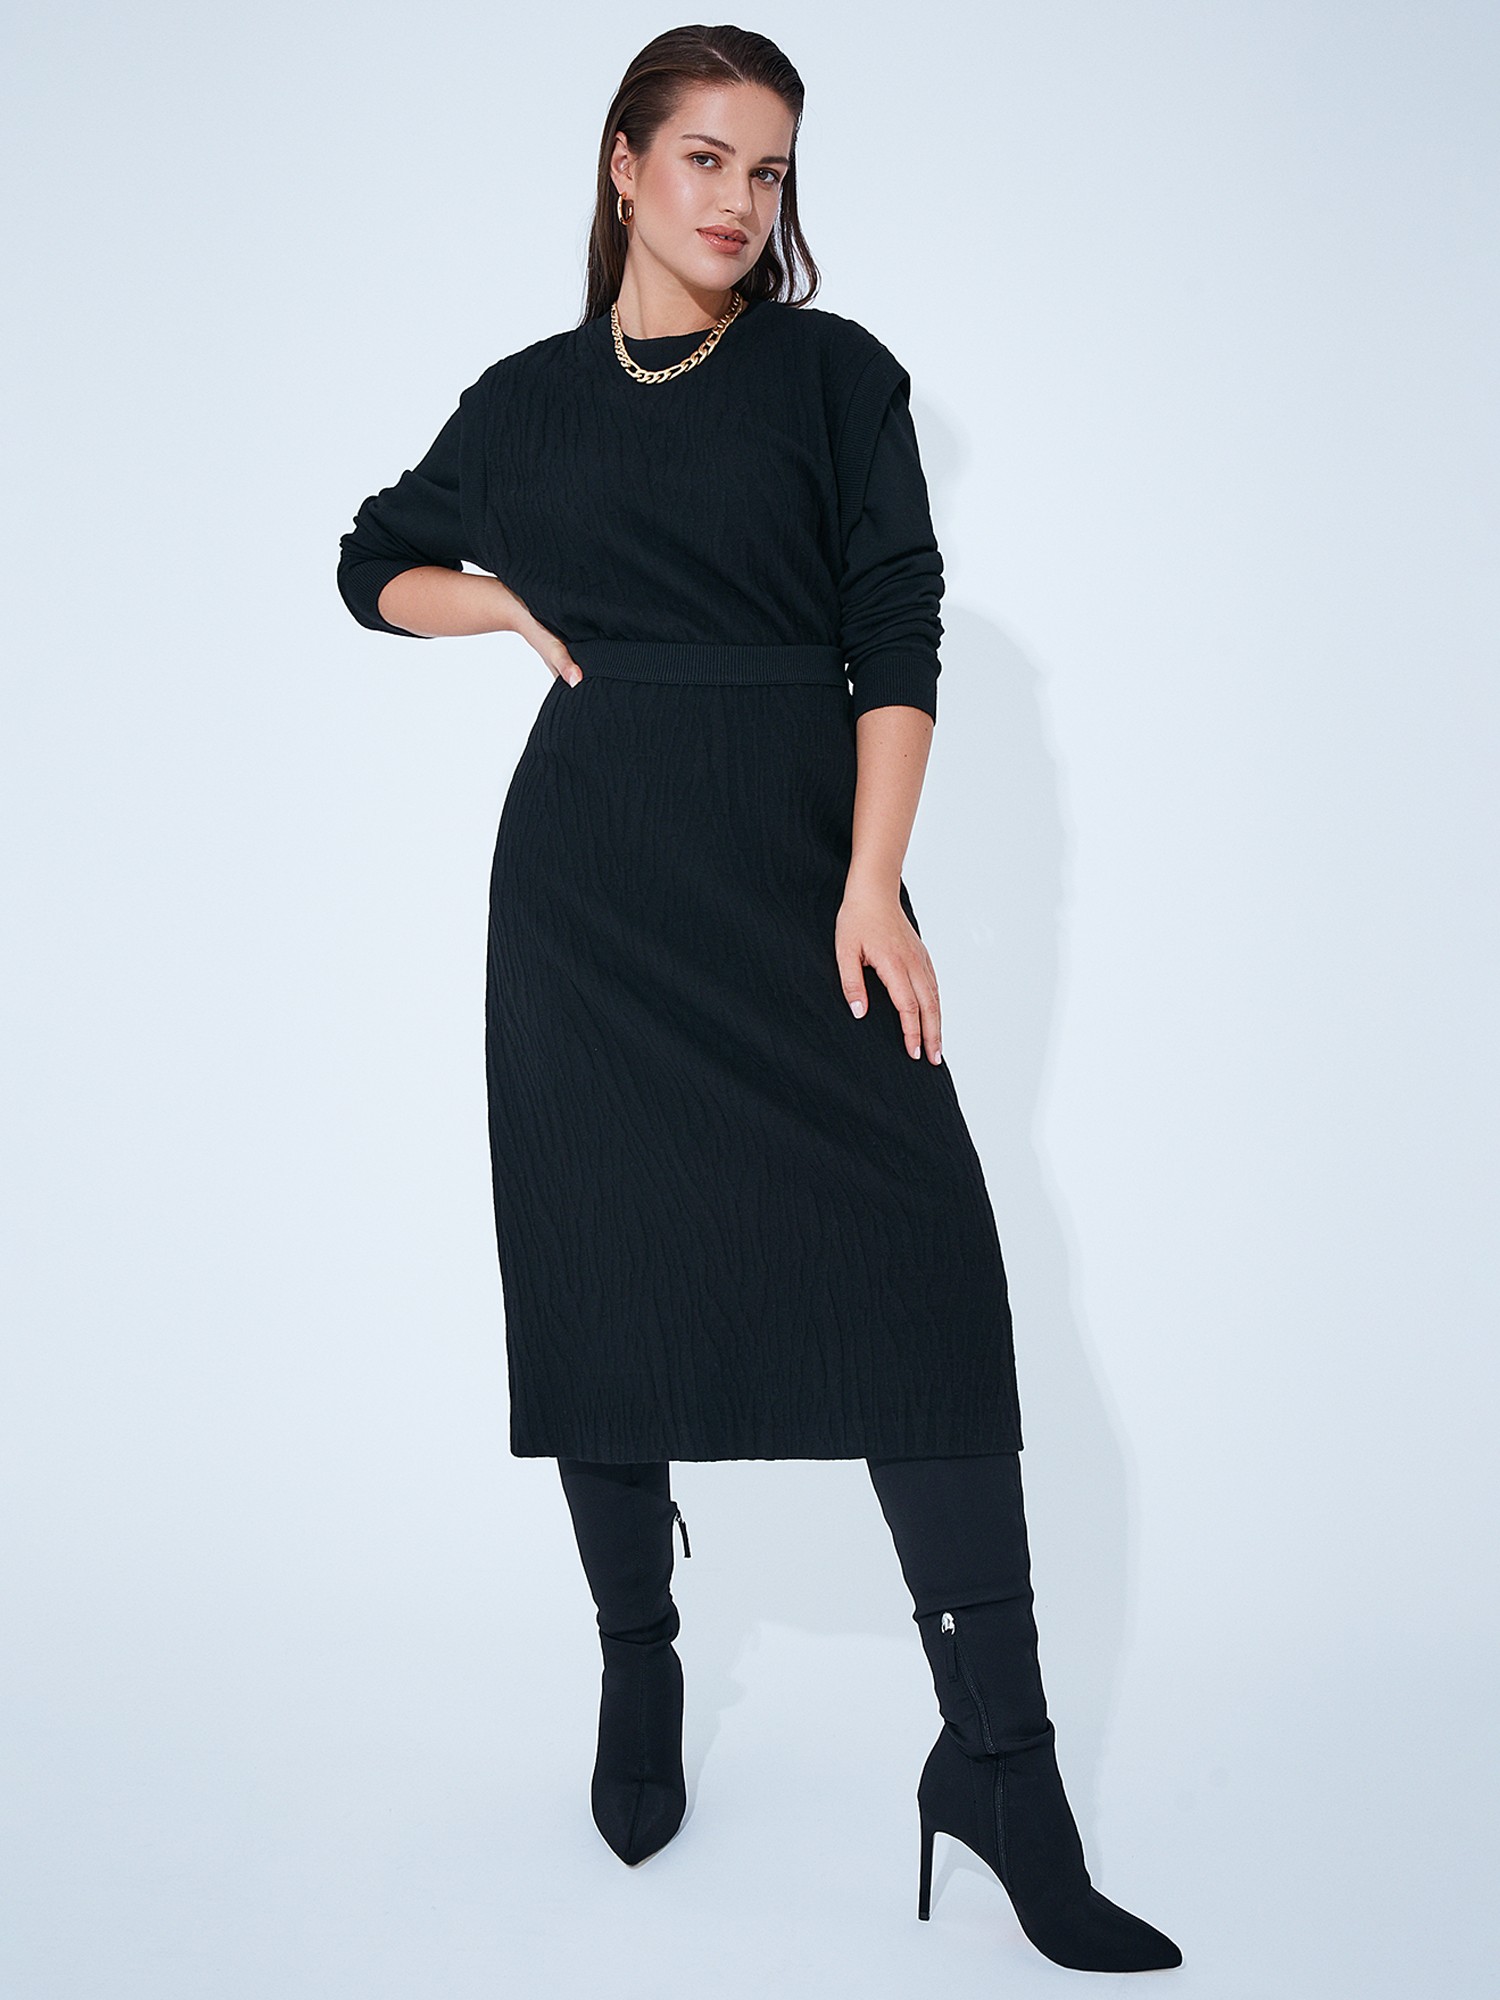 Чёрная трикотажная юбка Lalis SK0139K - фото 1